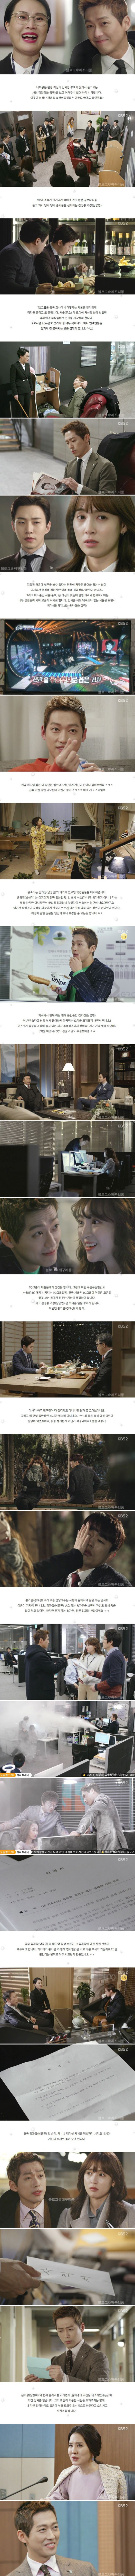 episode 8 captures for the Korean drama 'Chief Kim'